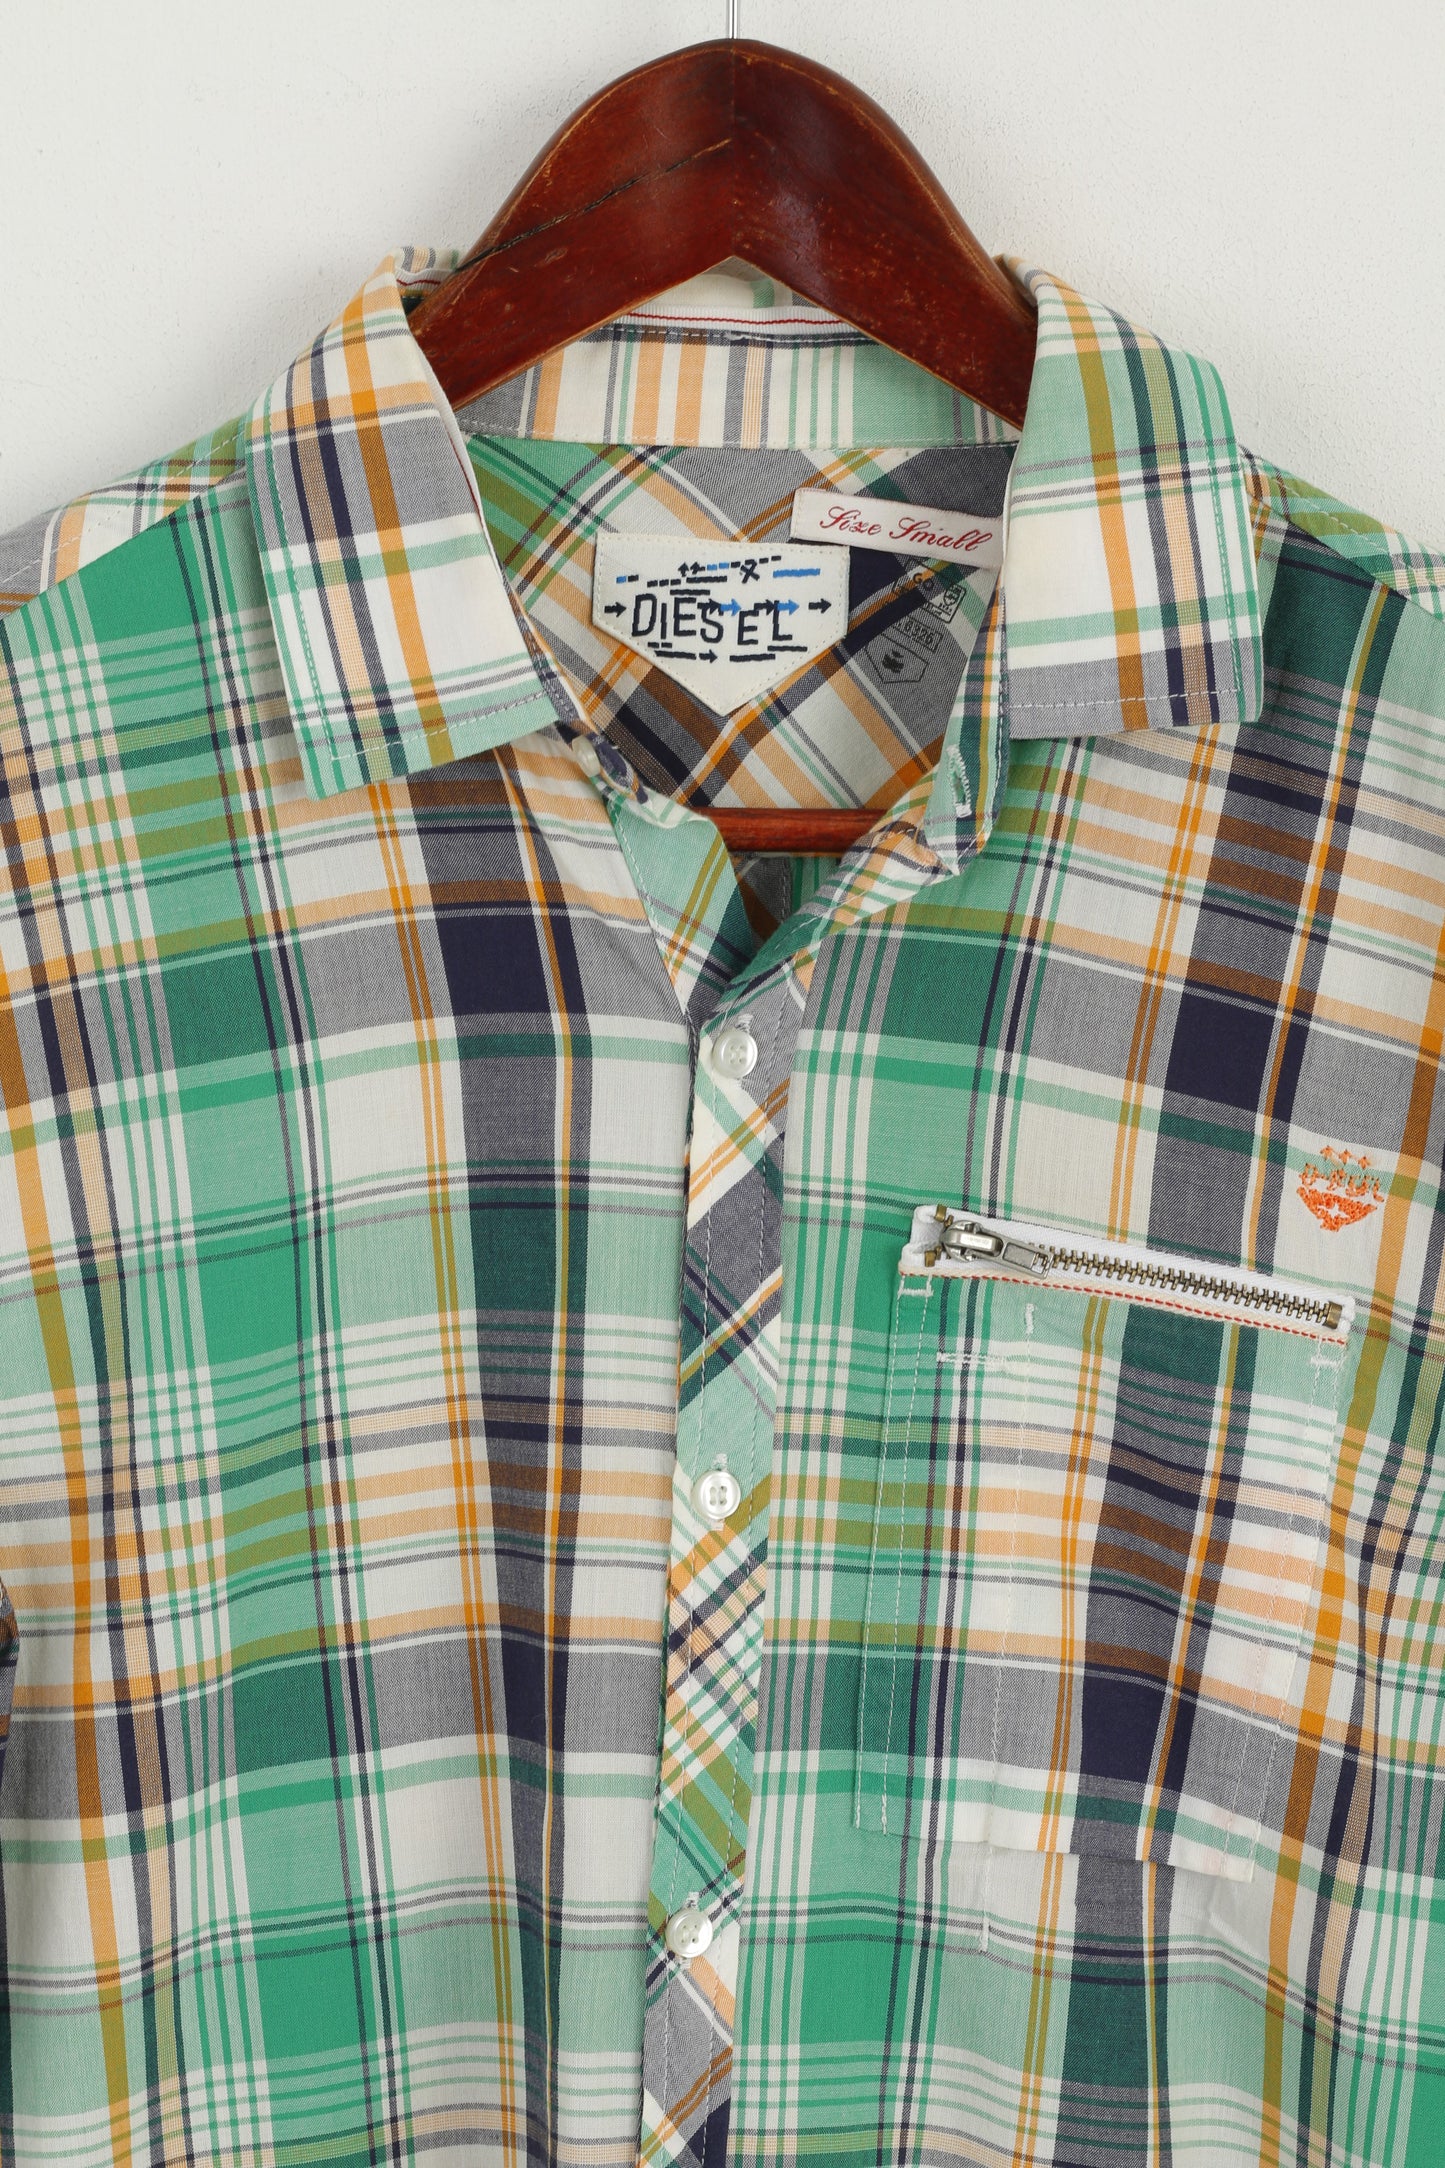 Diesel Men S Casual Shirt Green Cotton Checkered Zip Pocket Long Sleeve Top